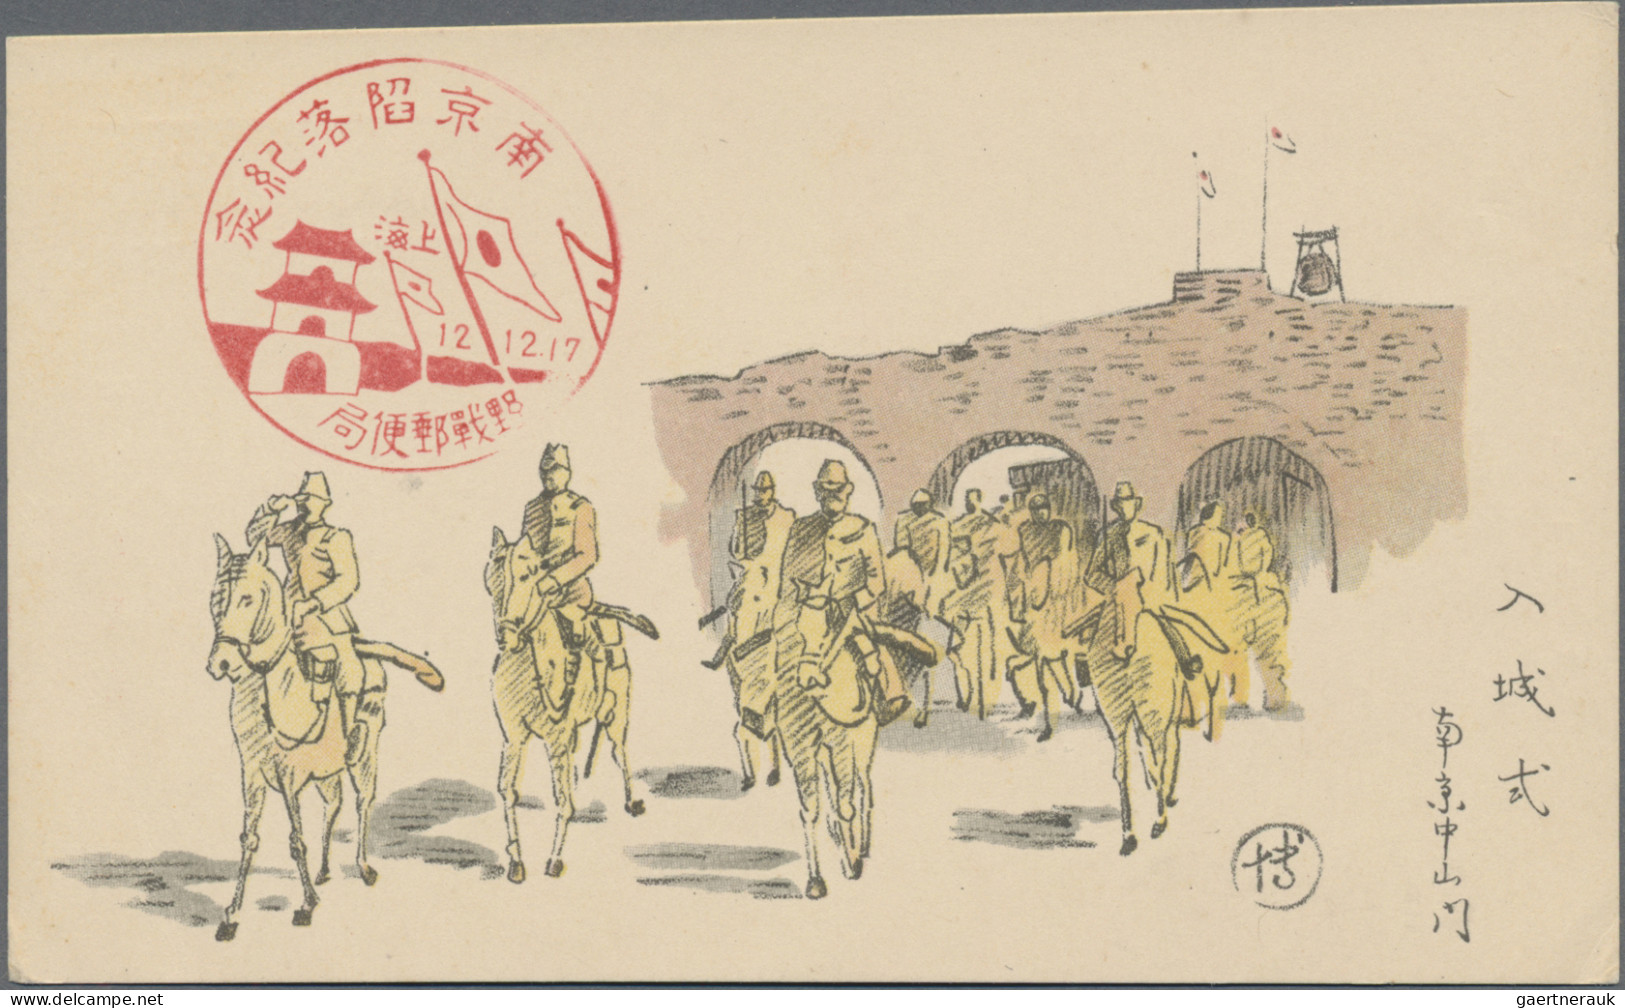 Japan: 1937/1942, Japanese military mail, the Sino-Japanese war: all w. postmark